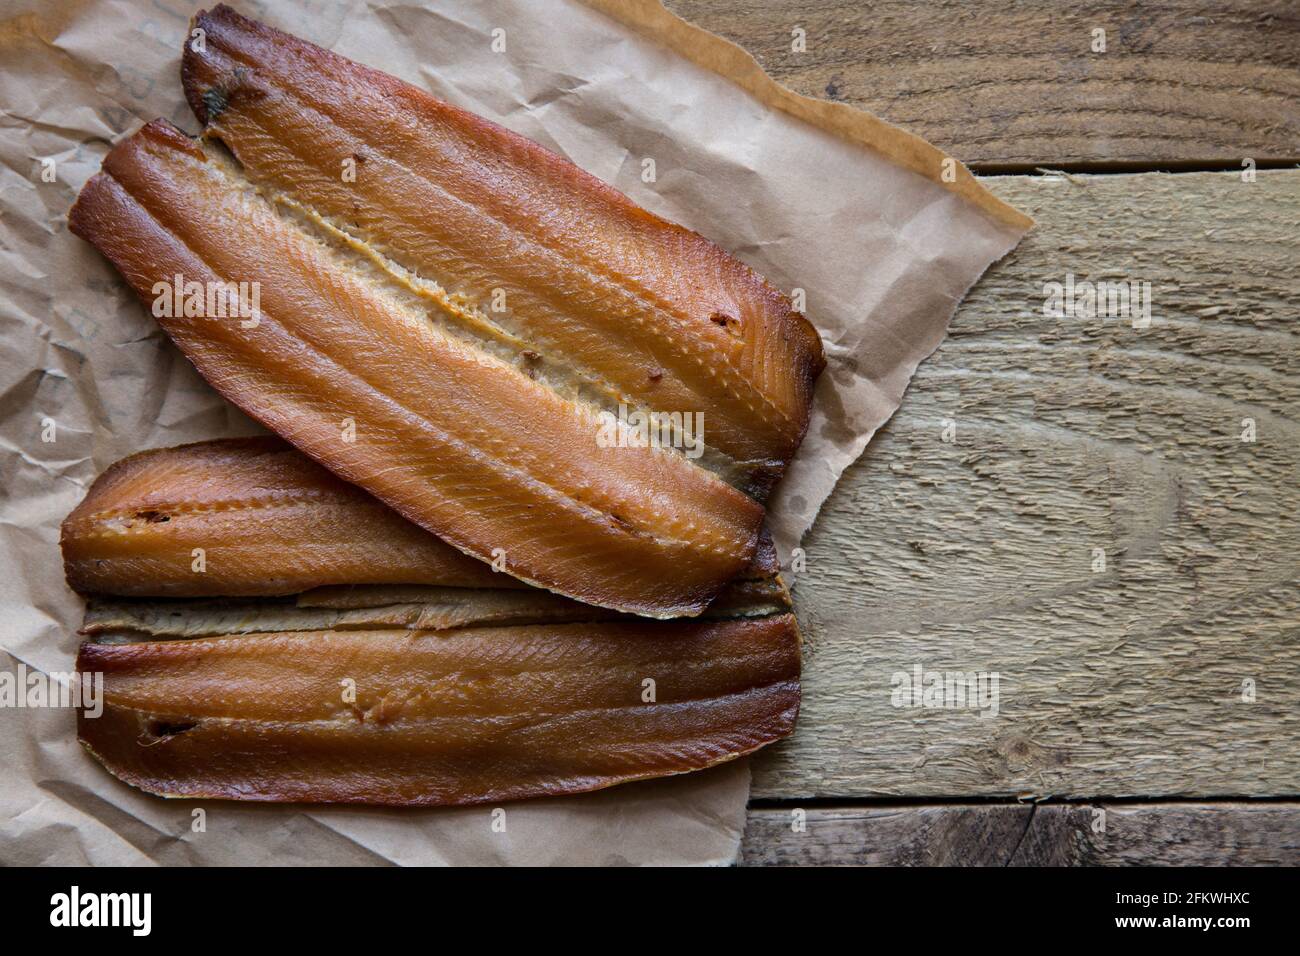 Cimini per kipper Cricer affumicati presentati su sfondo di legno. I peperoni sono aringhe affumicate e sono ricchi di oli di pesce. Inghilterra GB Foto Stock